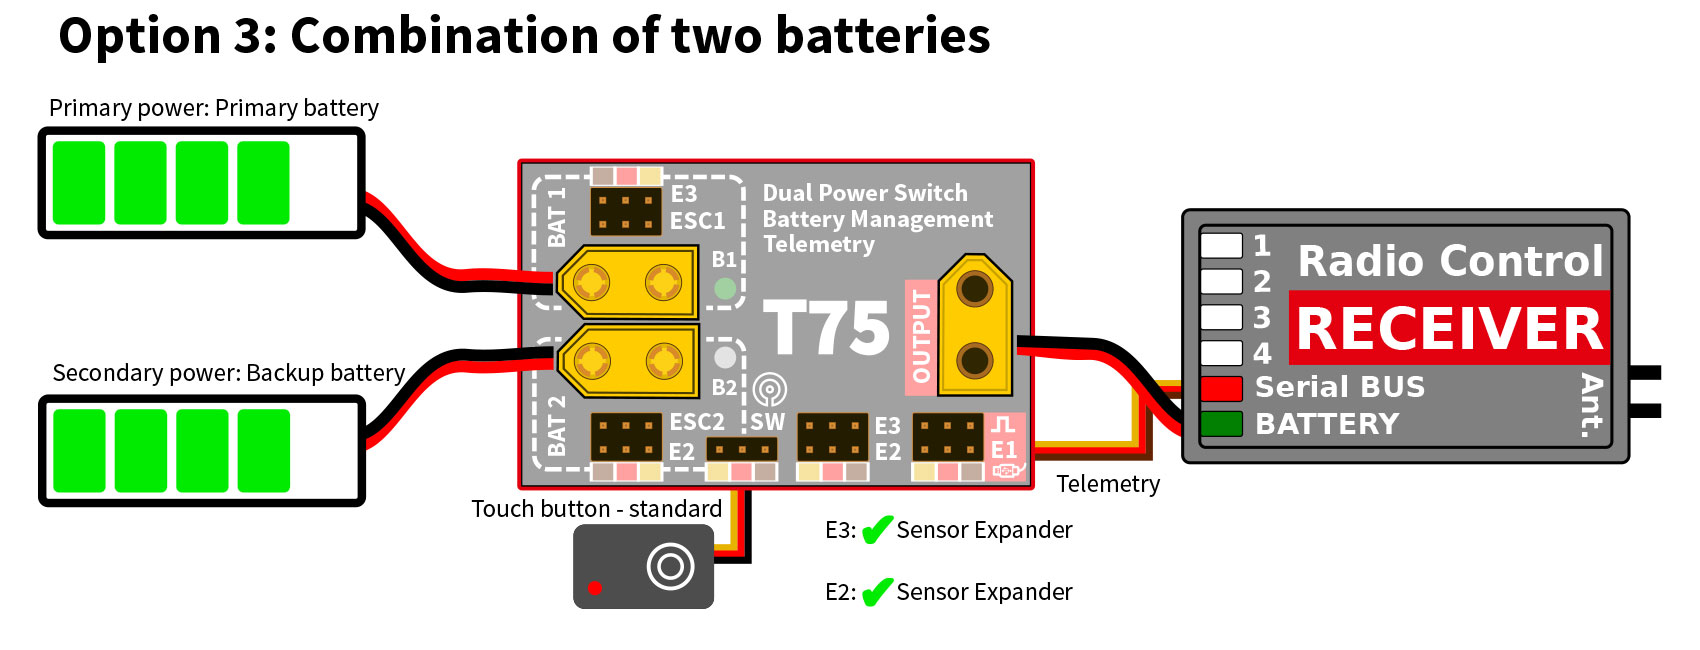 Elite Electronic Dual Power Redundant Switch w/Backup Battery Management & Telemetry Voltario T60 ESC (Jeti EX, Graupner HoTT, Futaba S.Bus2)